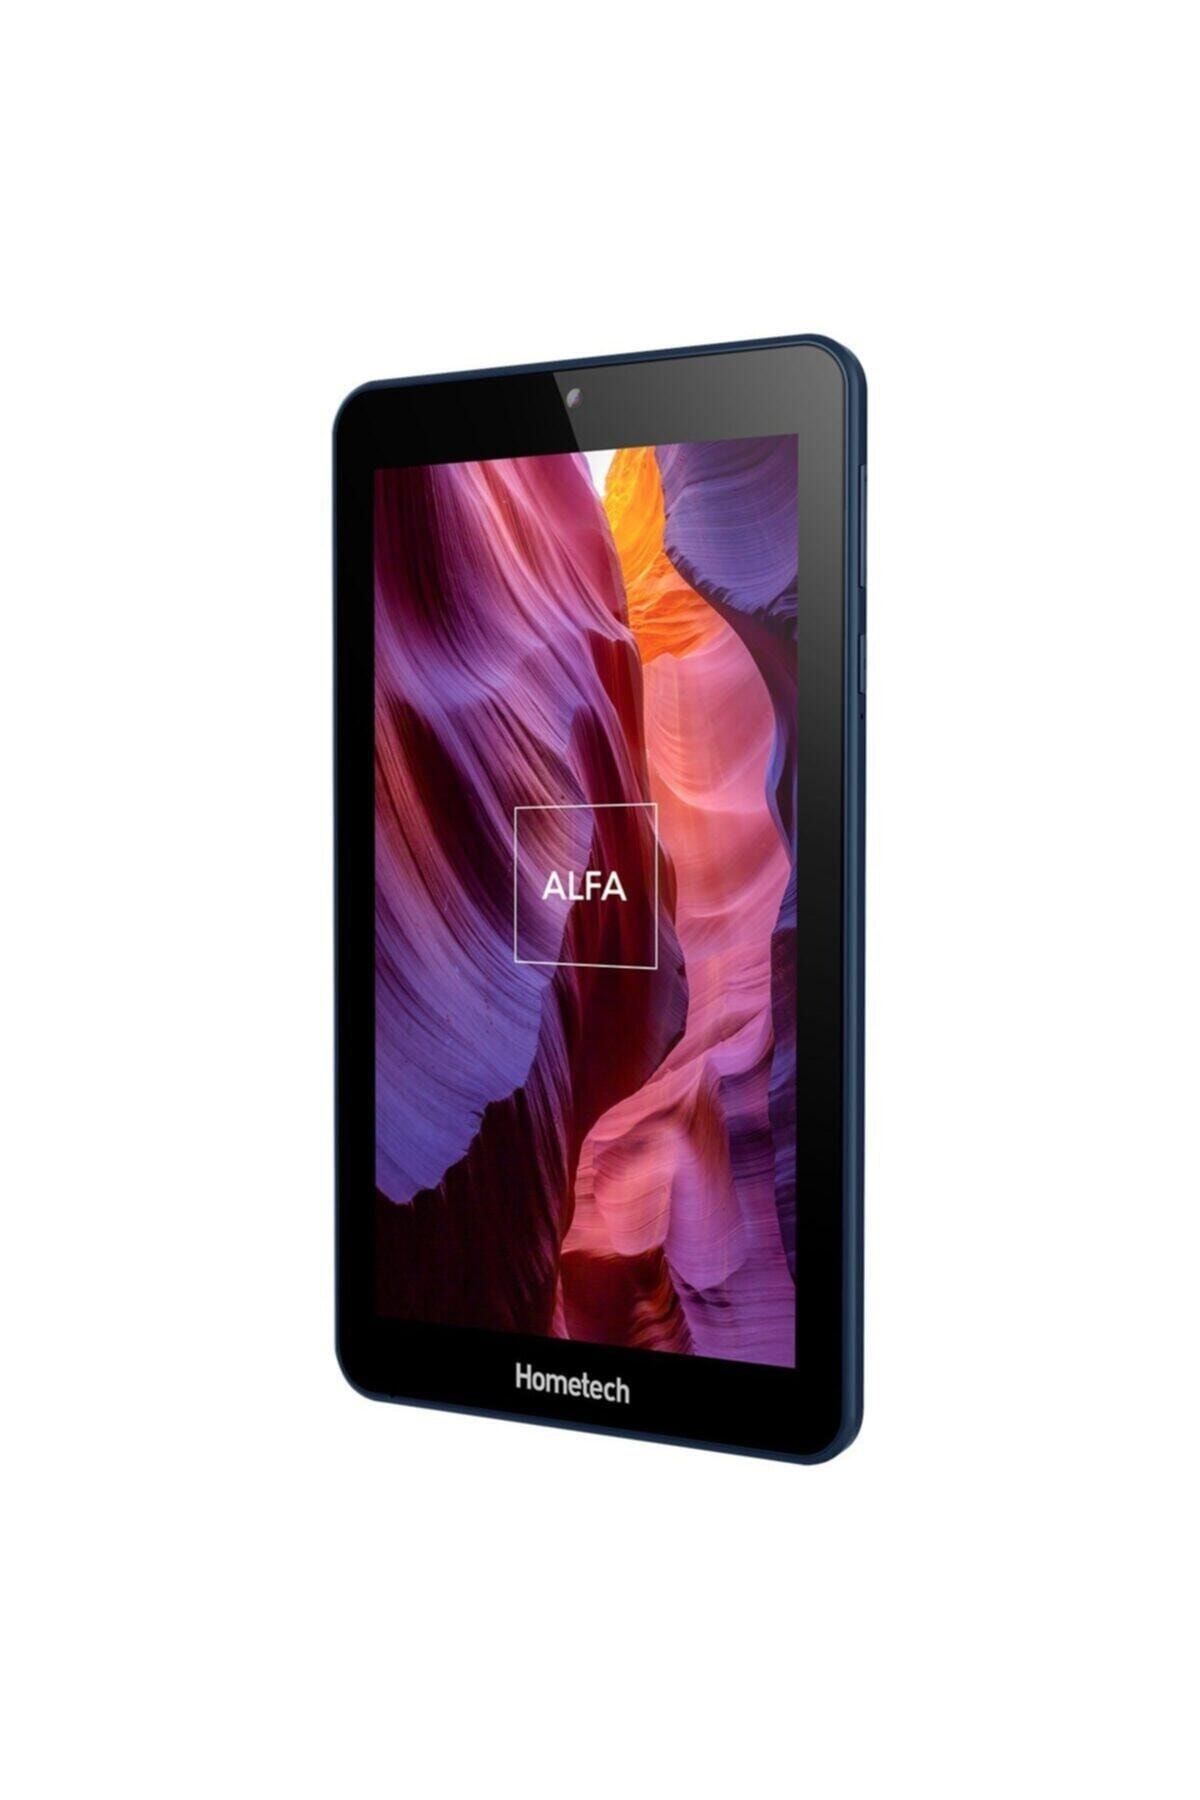 Hometech Alfa 7 Premium Lm 2gb 32 Gb Ips Ekran Eba Tv+zoom Destekli Tablet